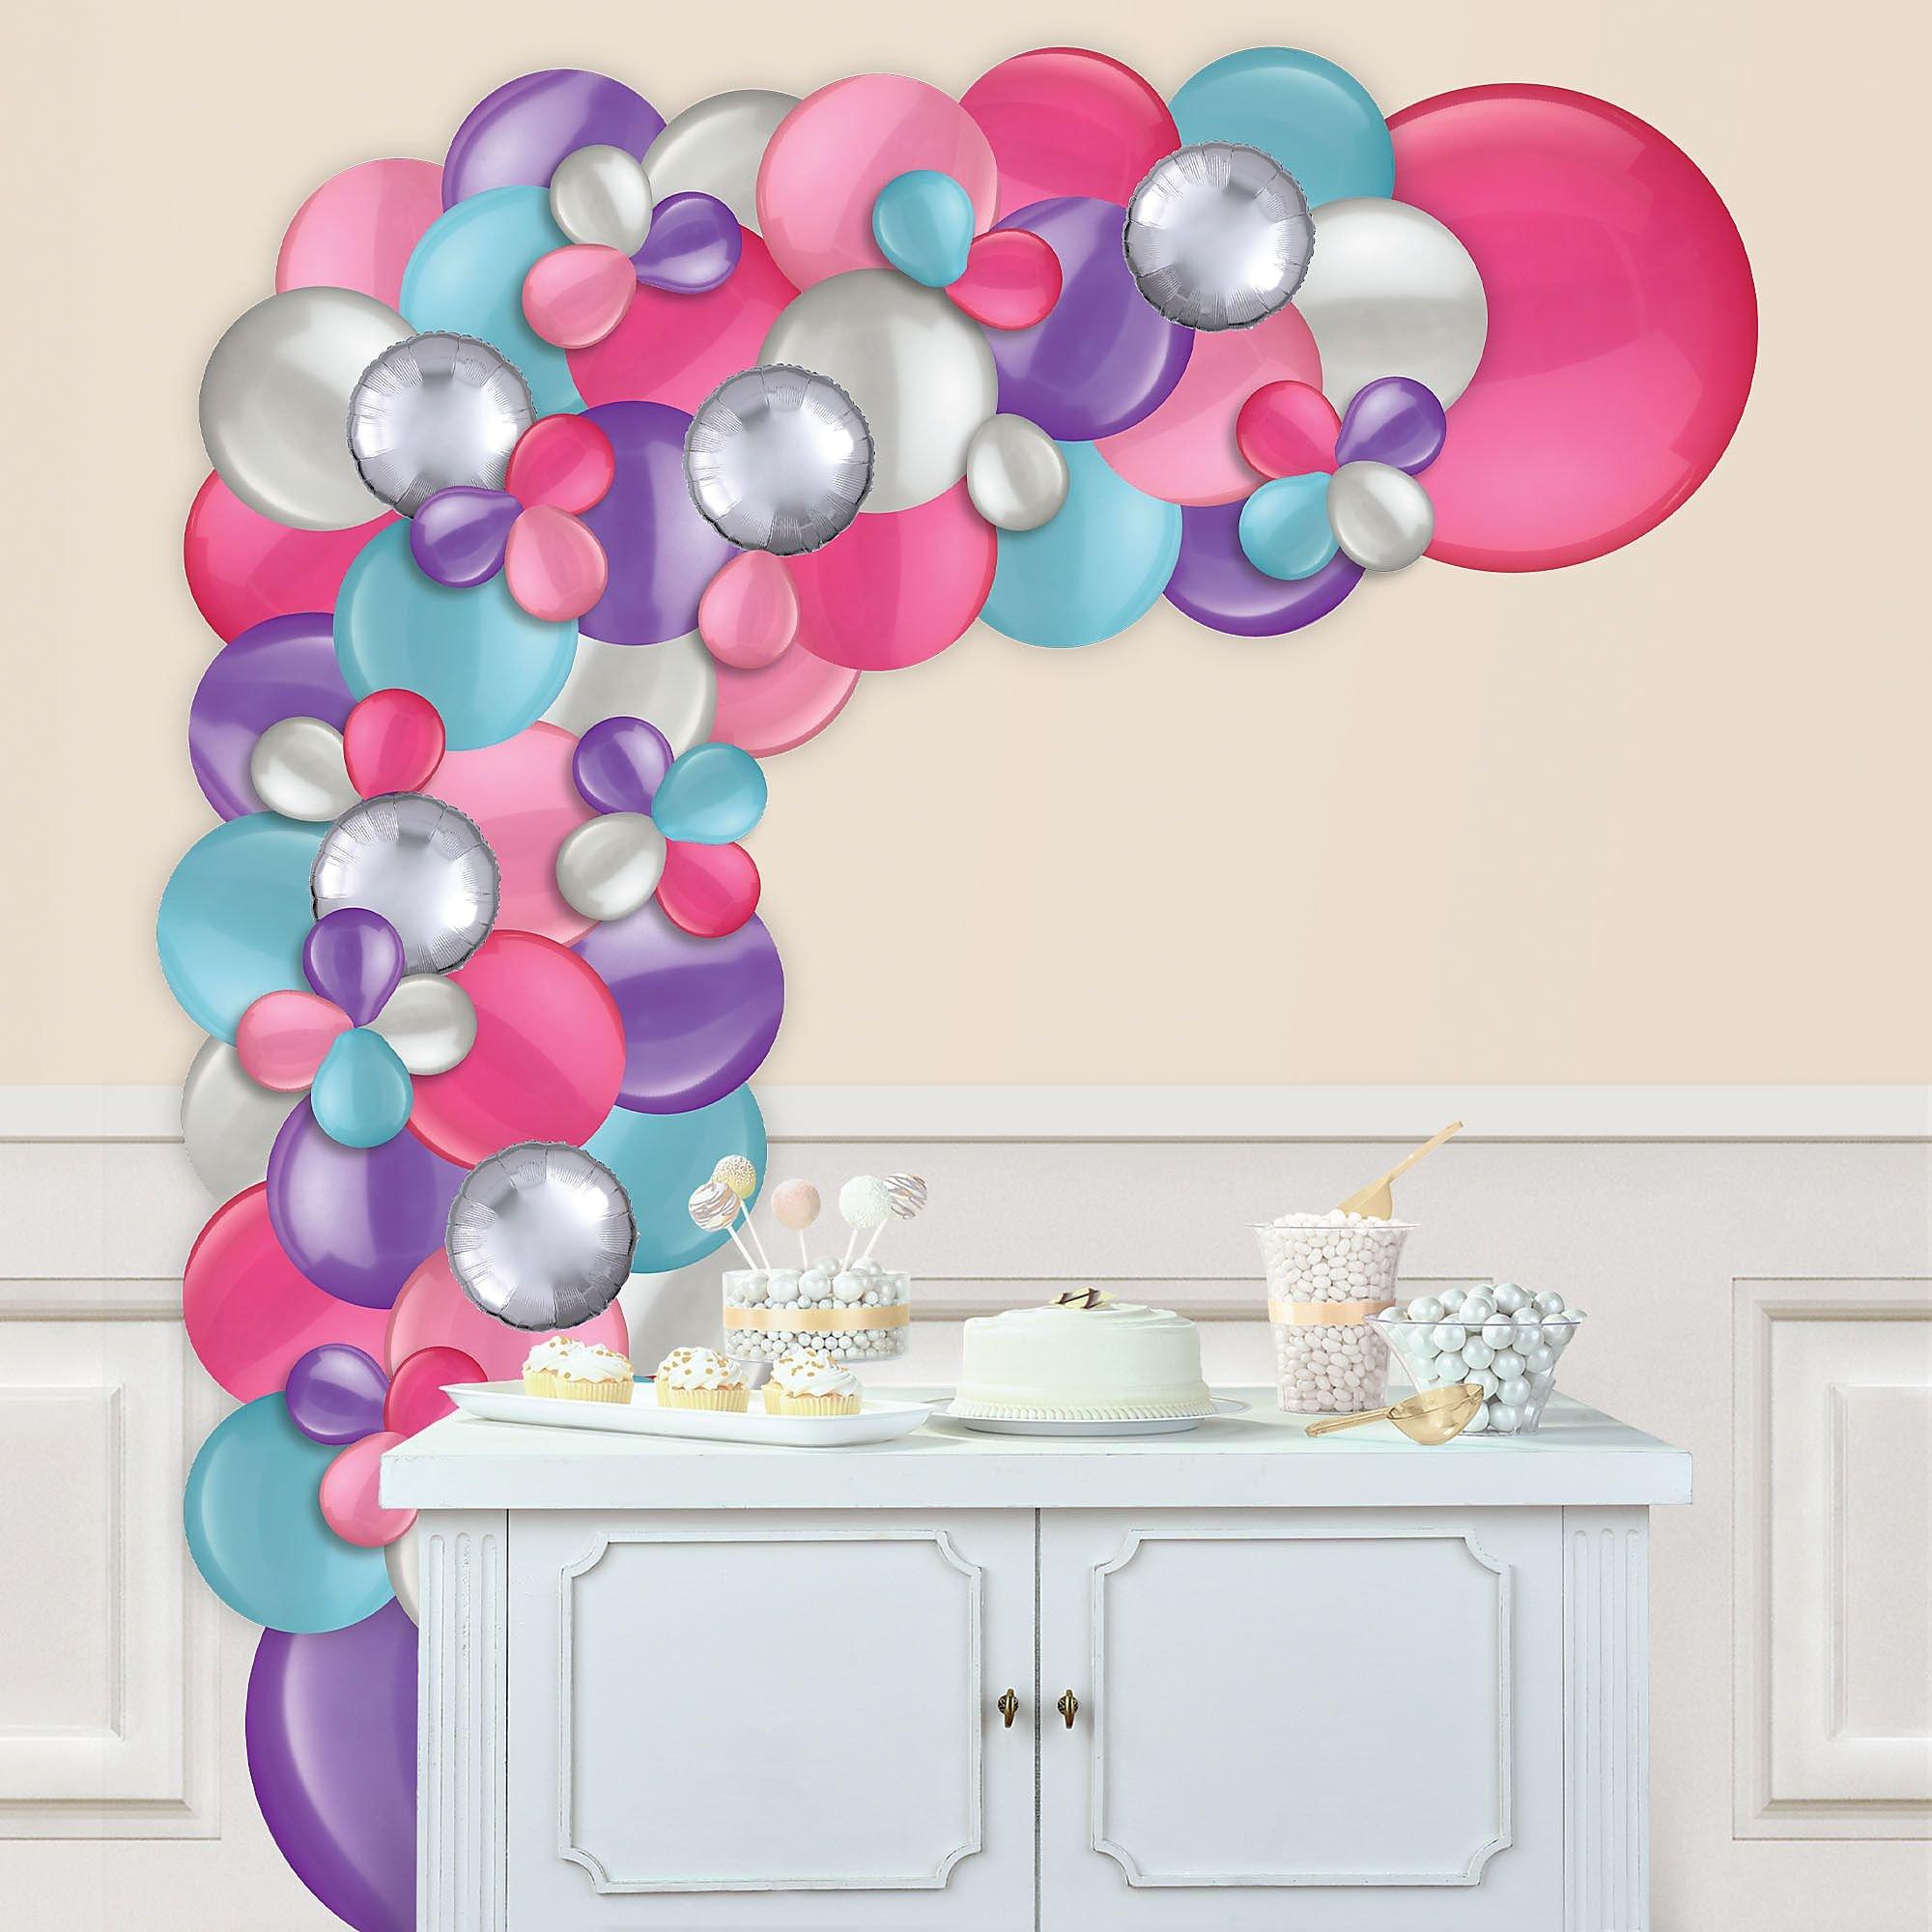 Multicolor balloon arch